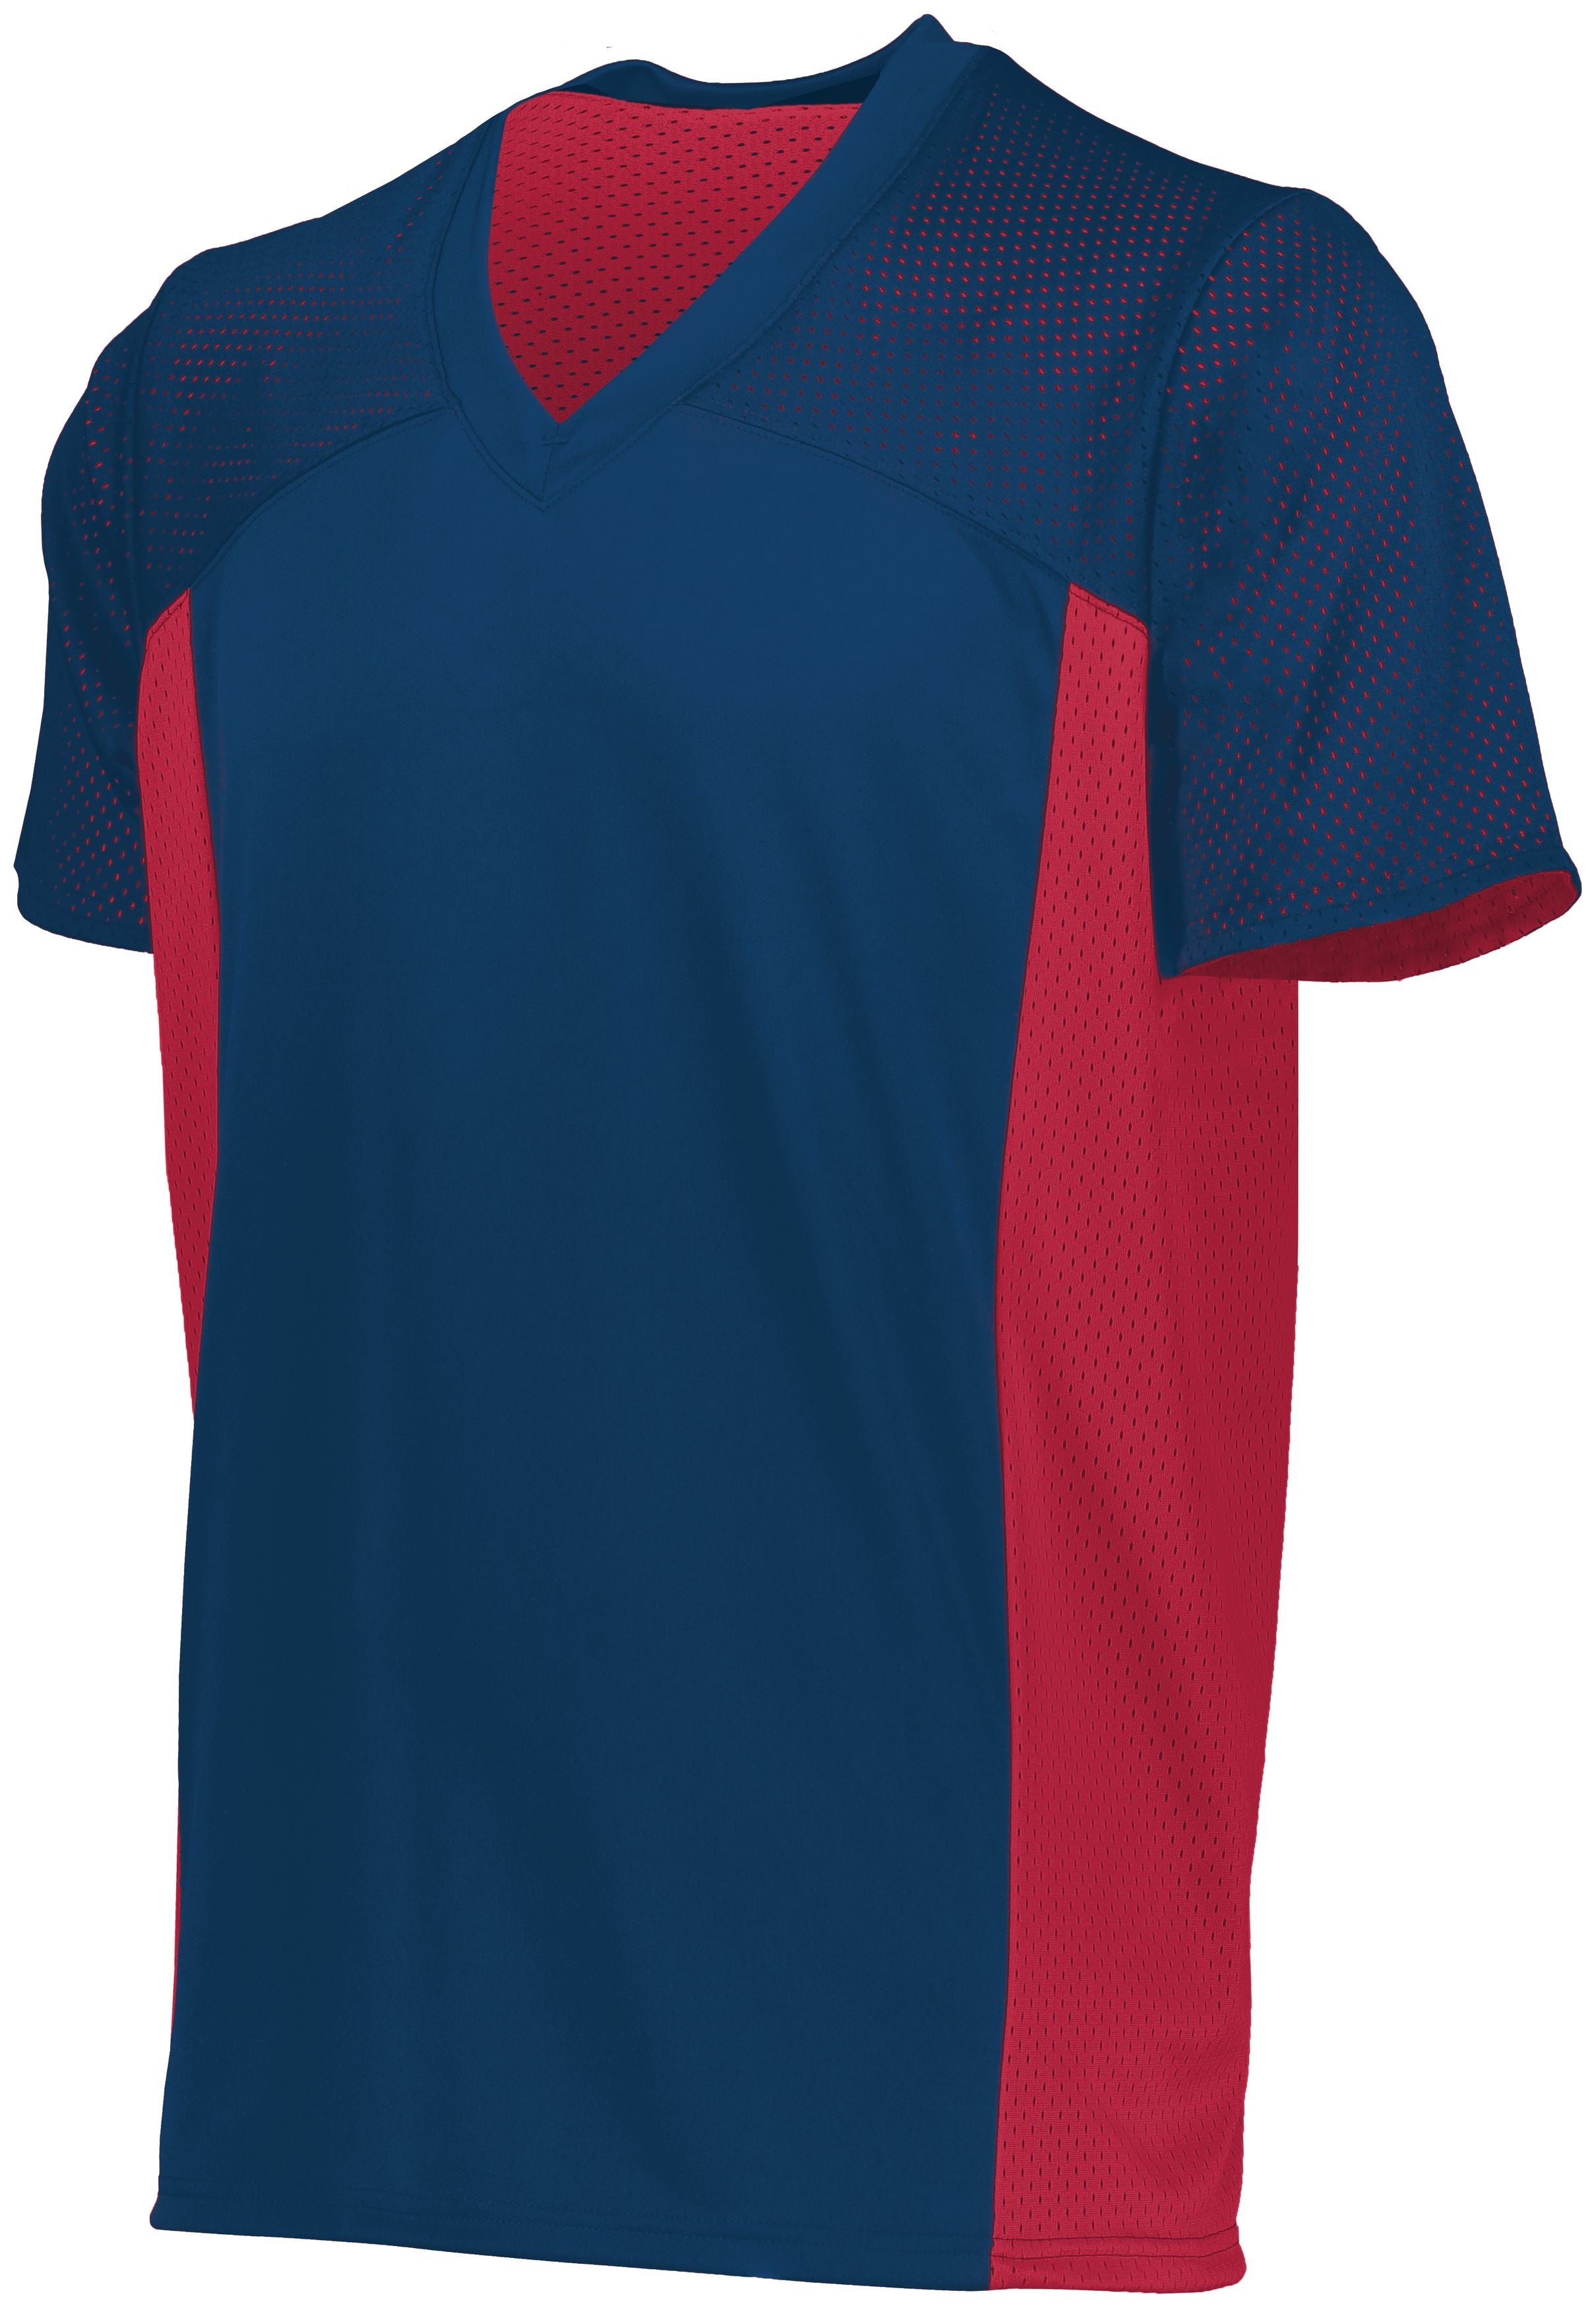 Augusta Sportswear Youth Reversible Flag Football Jersey